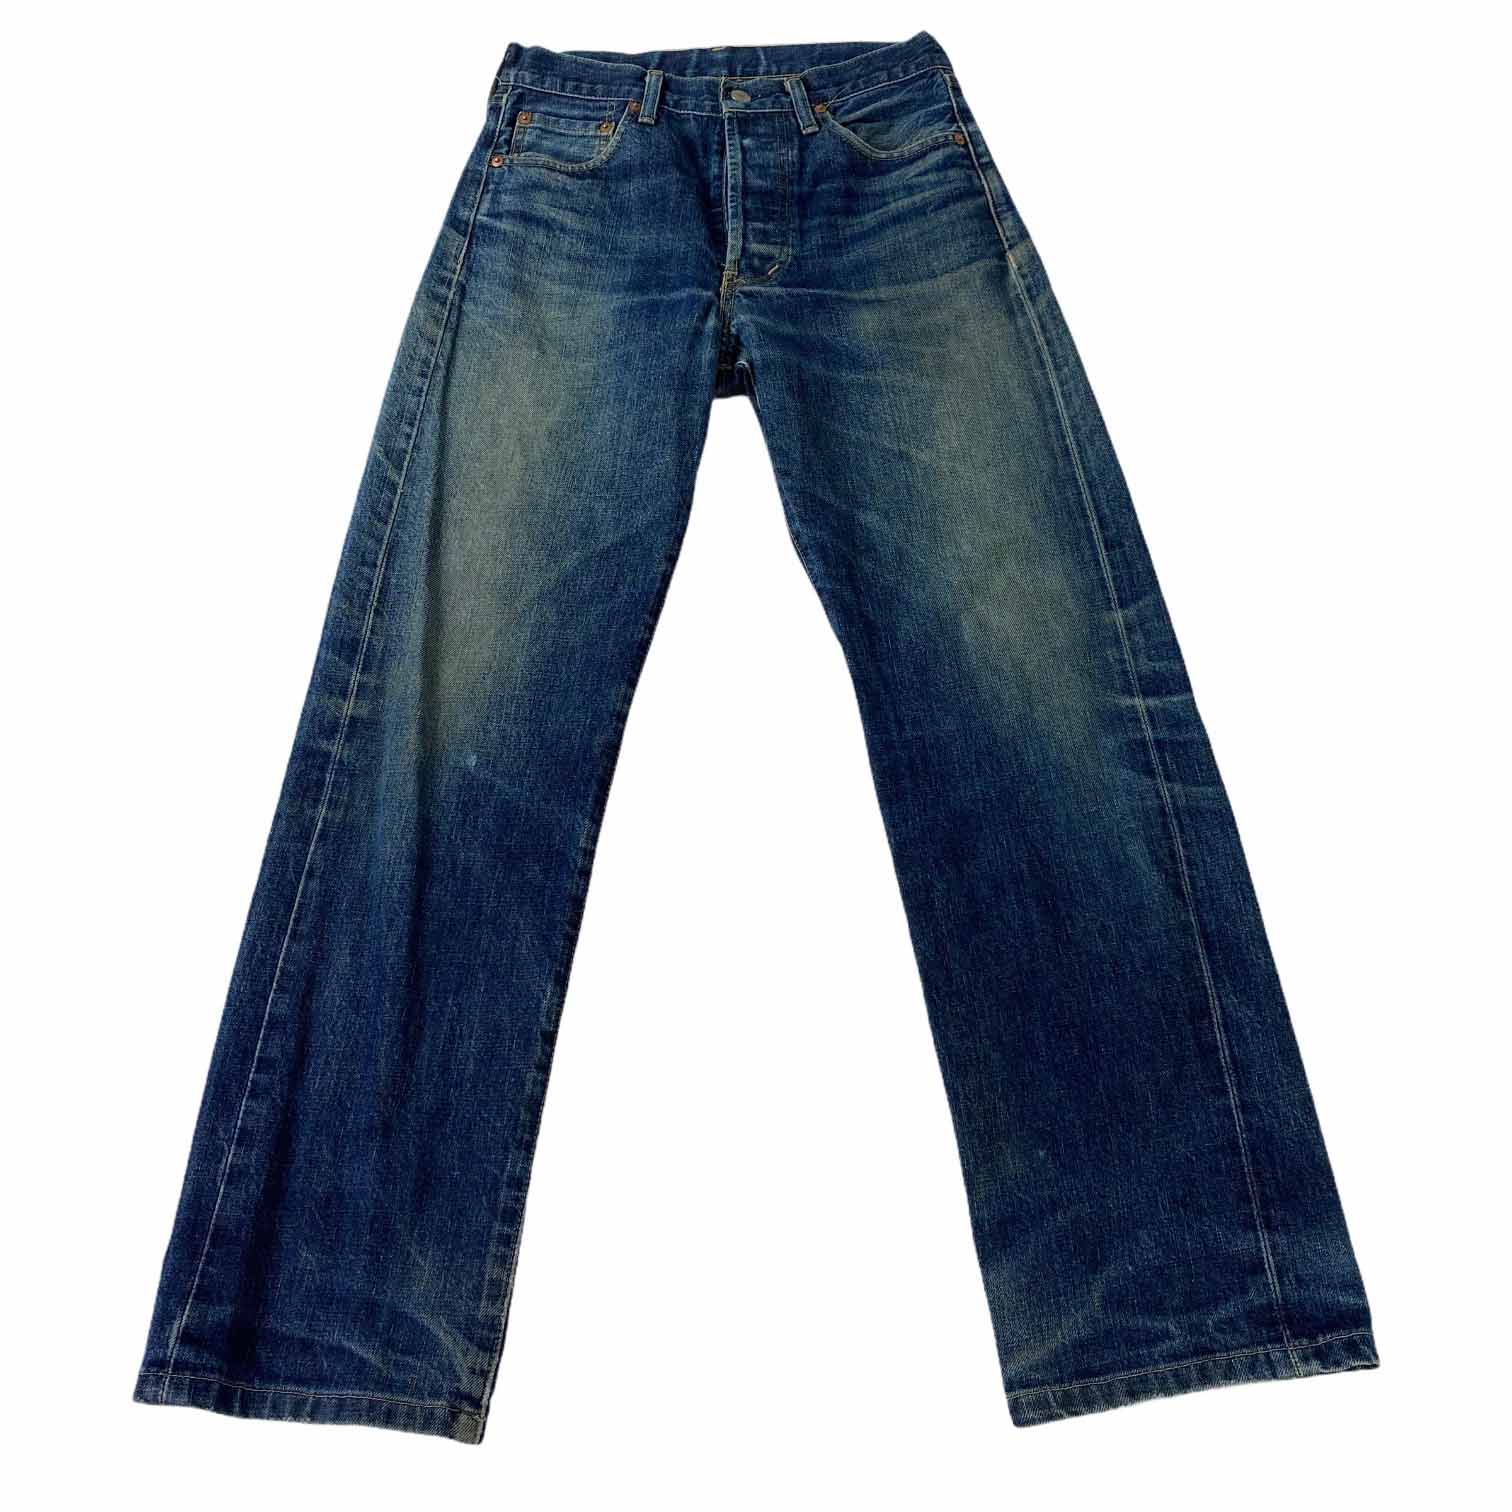 [Levis] (Vintage) 503b Jean - Size 30/34